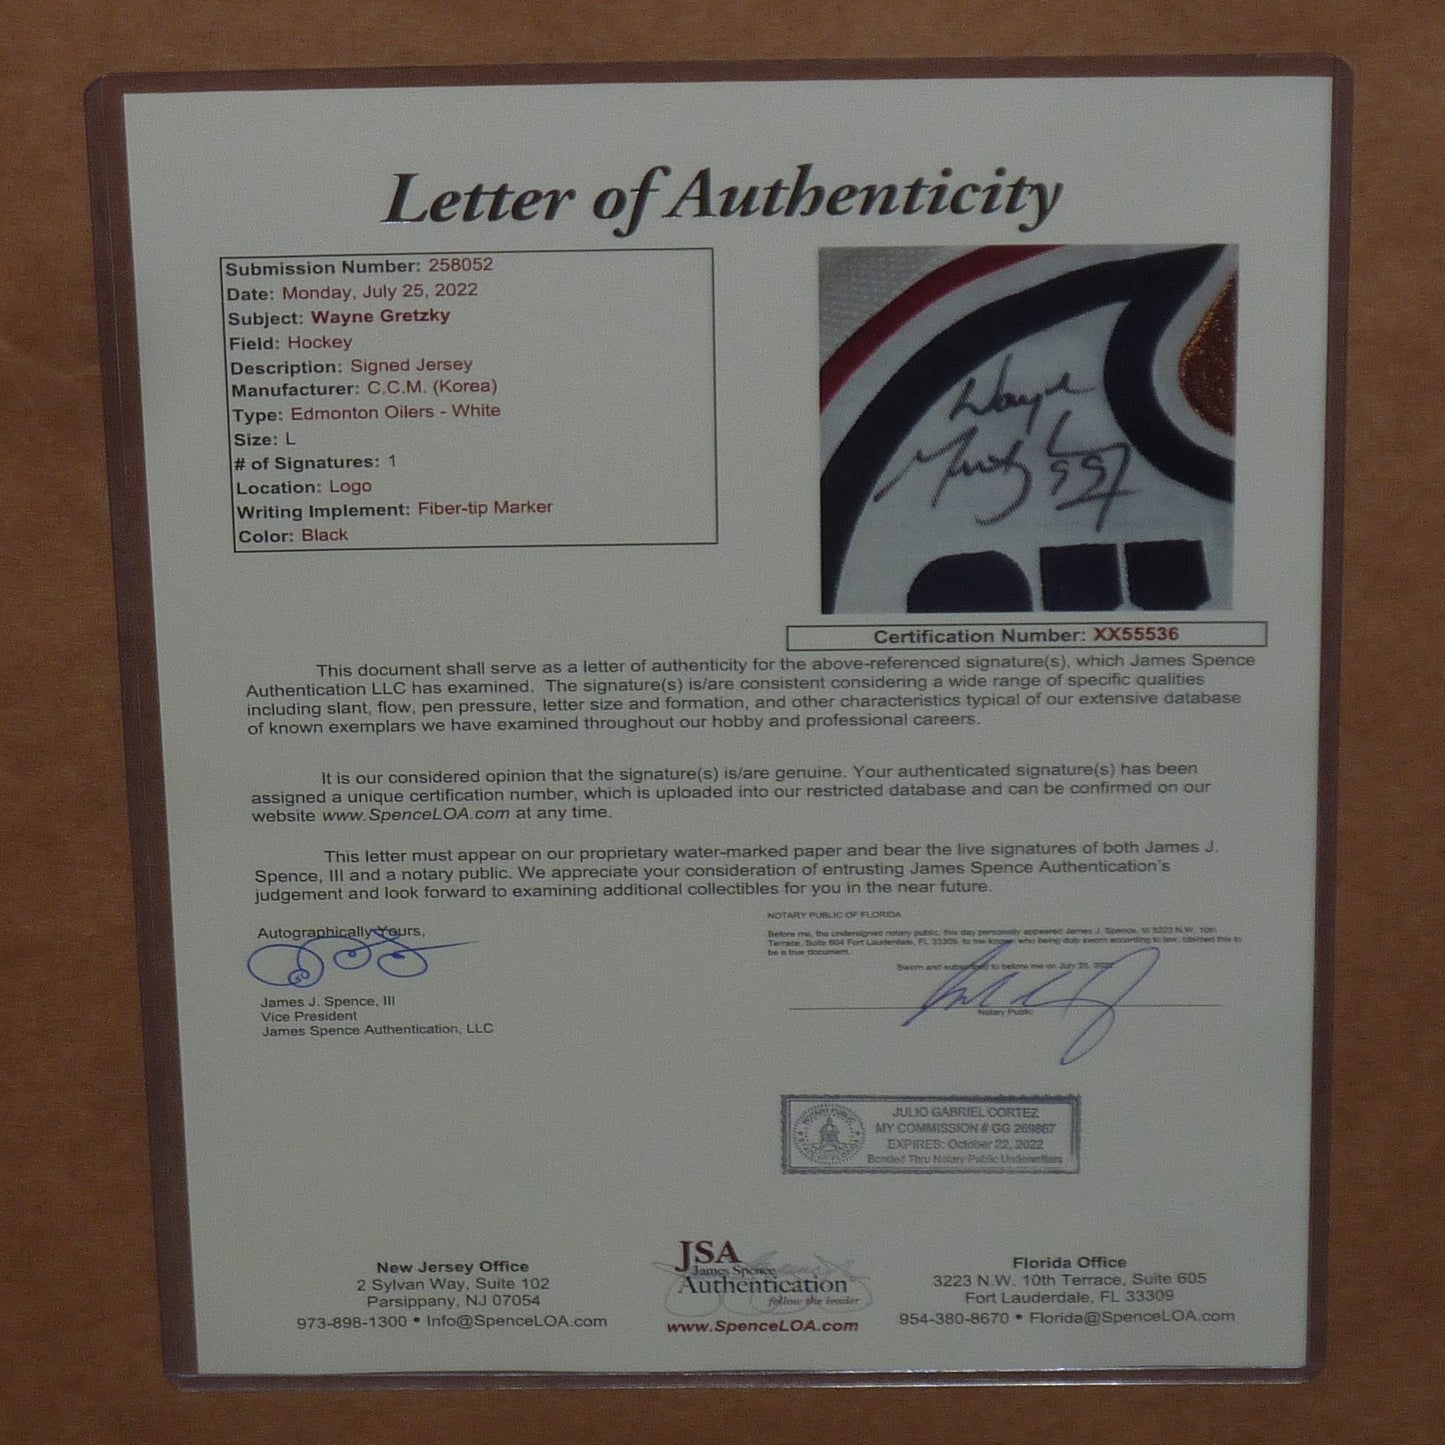 Wayne Gretzky Autographed Edmonton Oilers (White) Deluxe Framed Jersey - JSA Letter